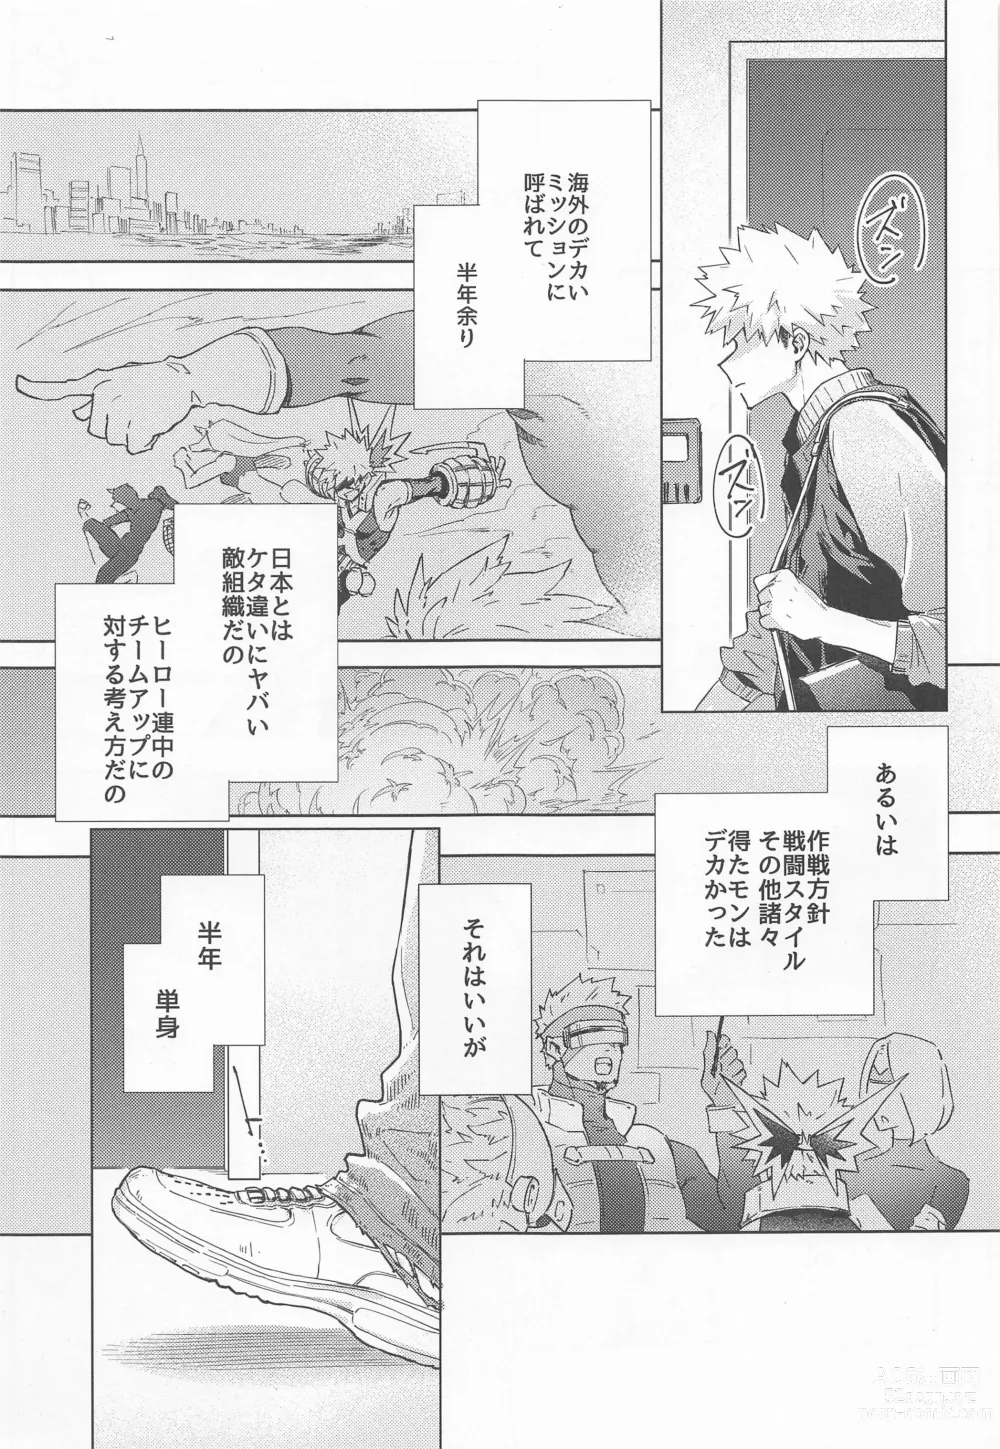 Page 2 of doujinshi Oppai Nonde Nenneshite